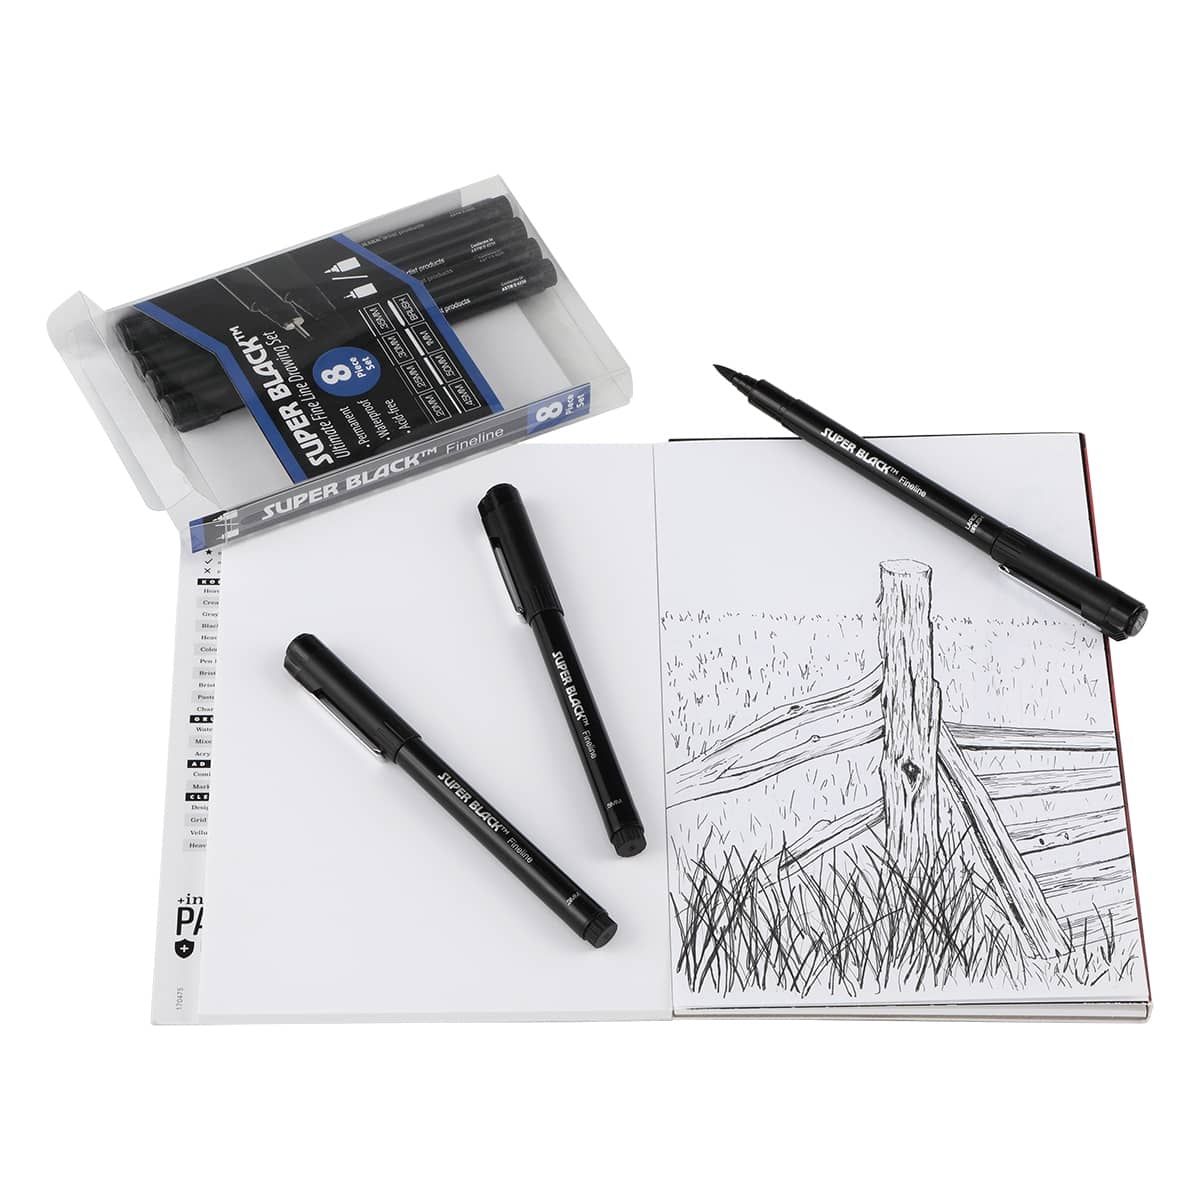 Creative Mark Super Black Permanent Fineliner Pen Sets